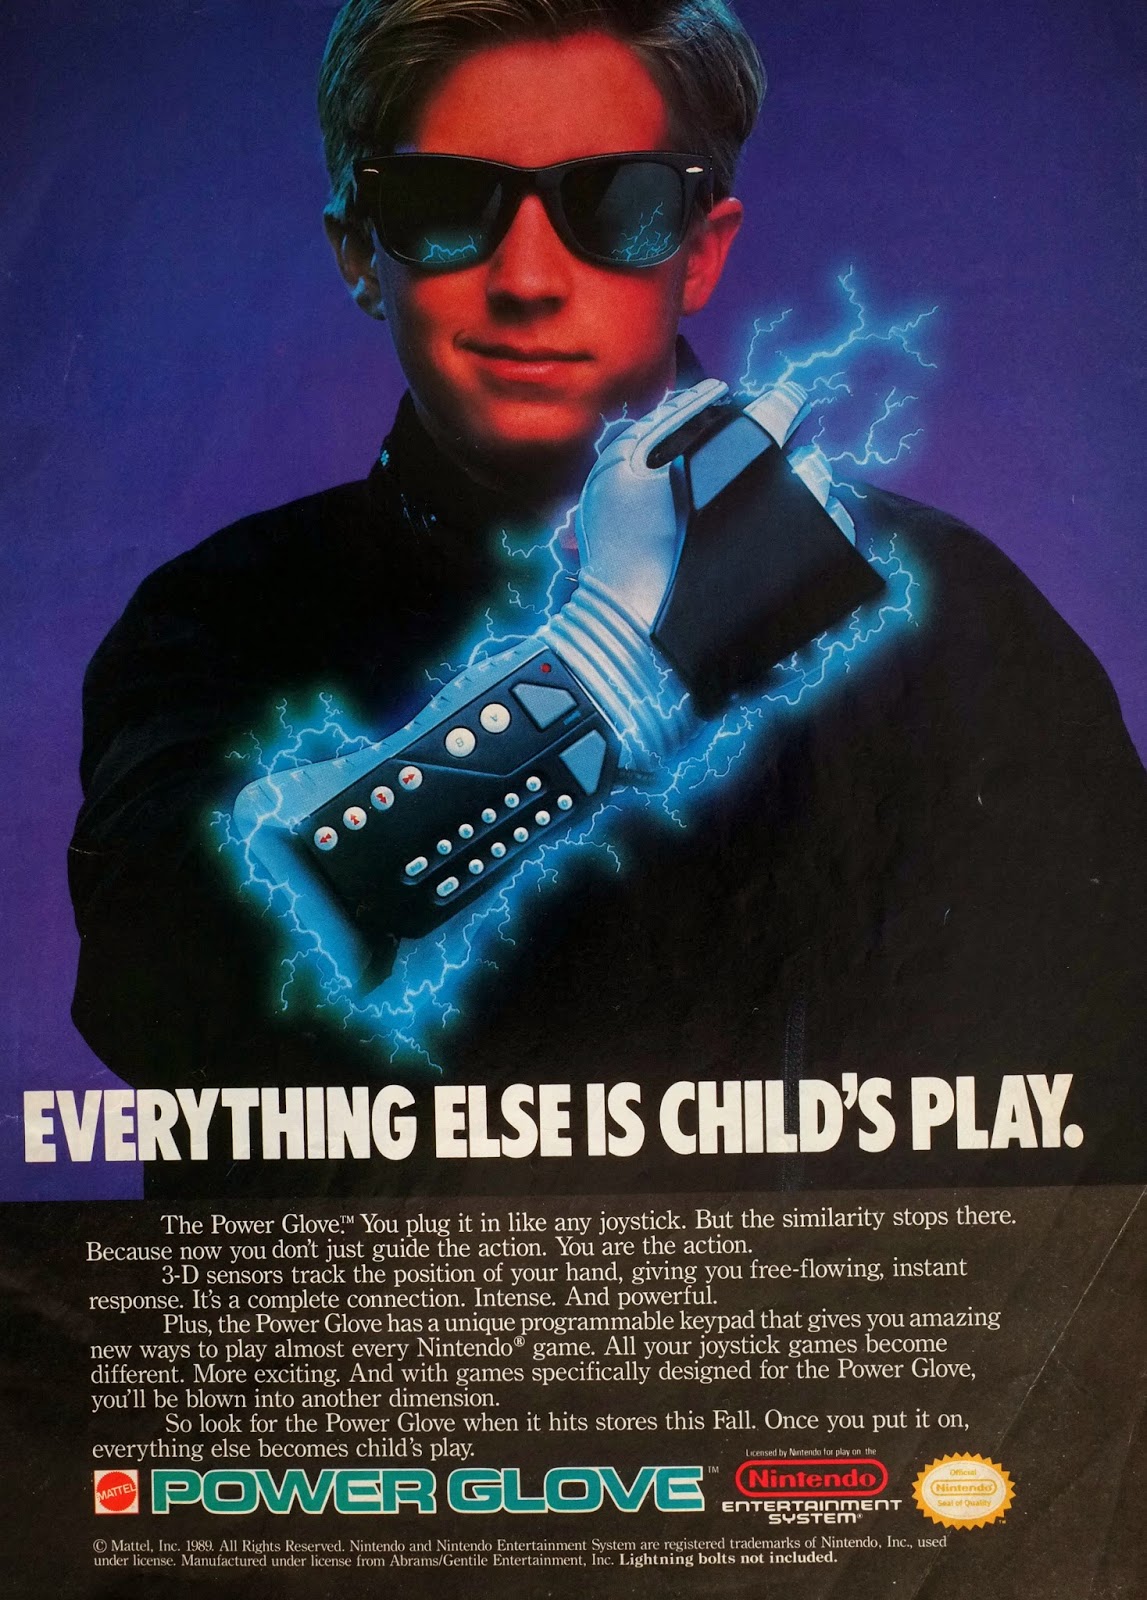 Nintendo Power Glove advertisement